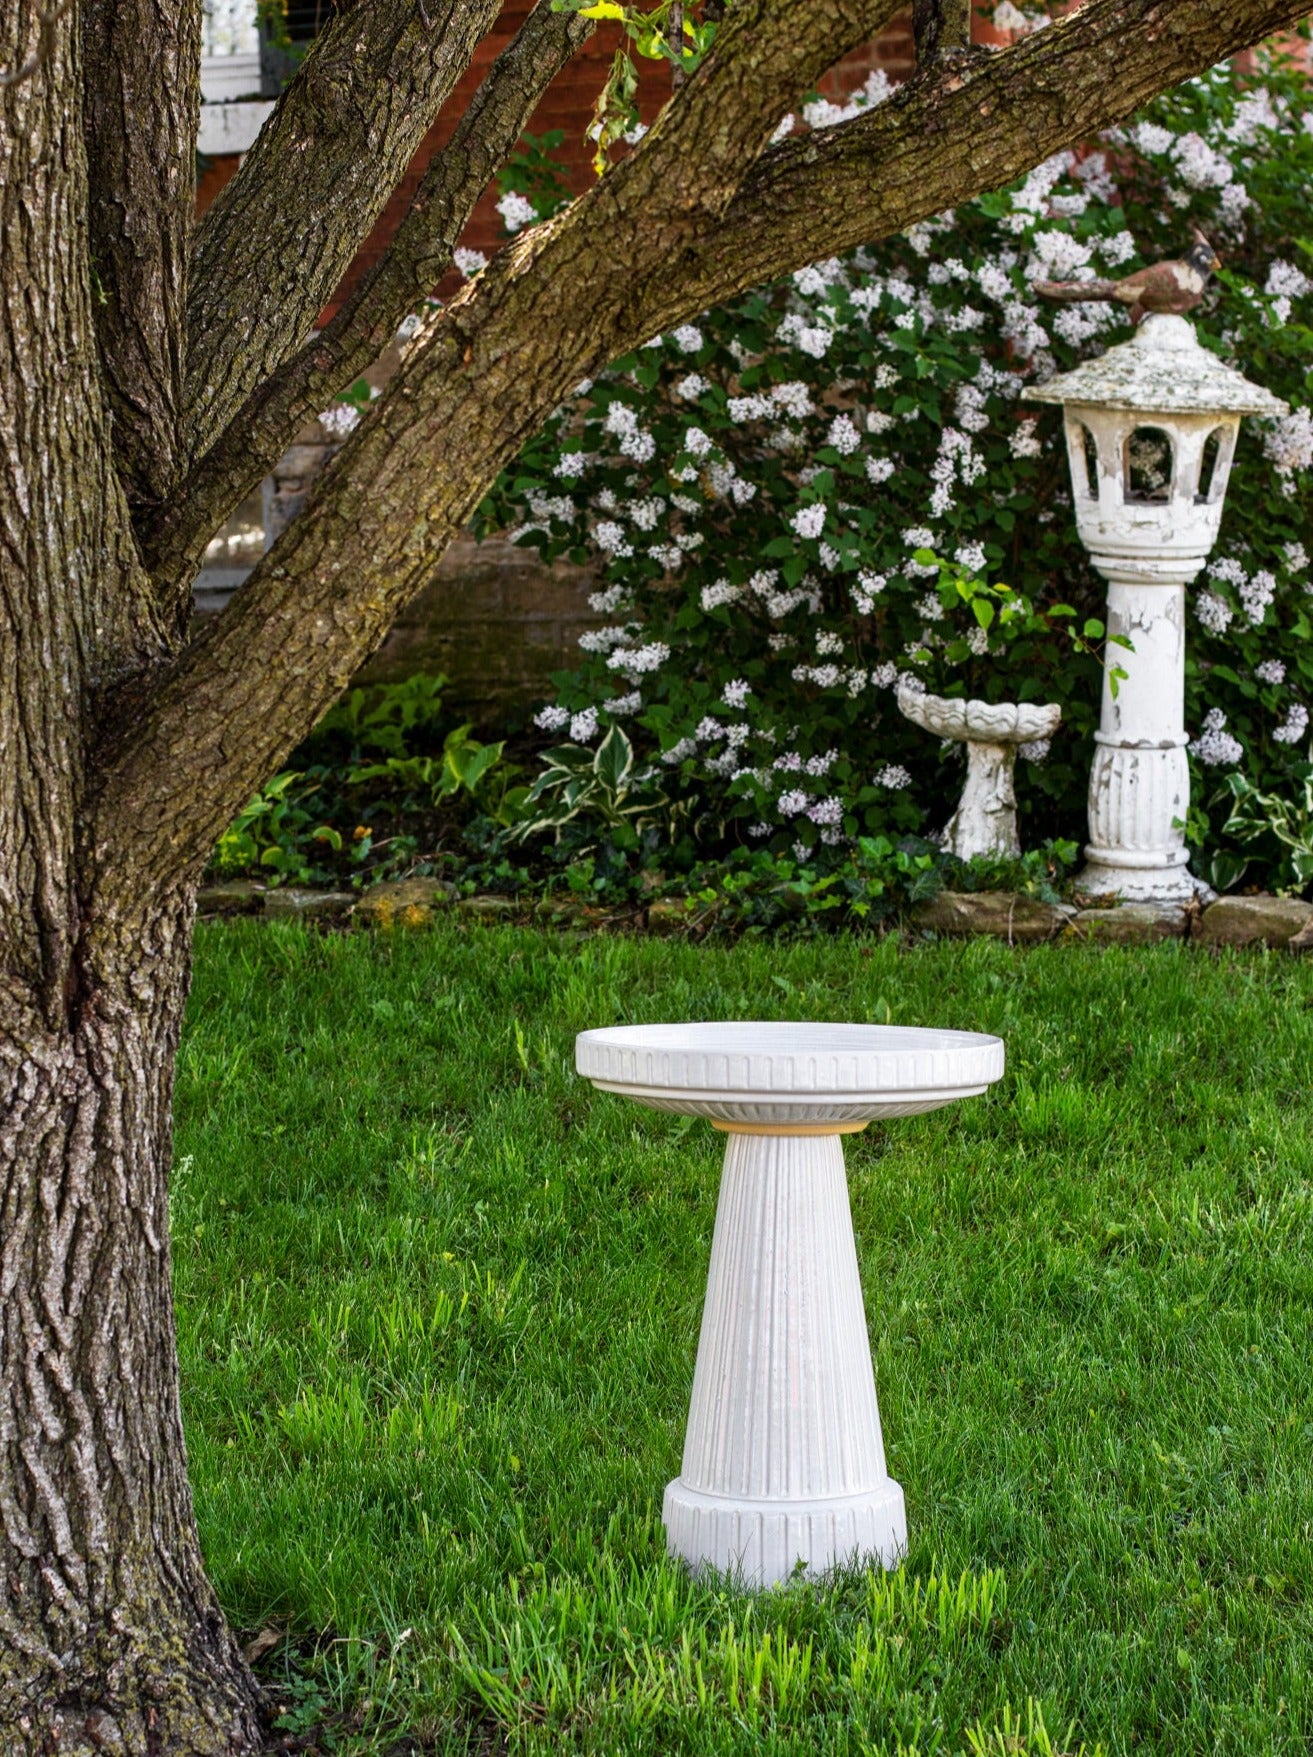 ceramic white birdbath with stripped design in a landscaped garden setting